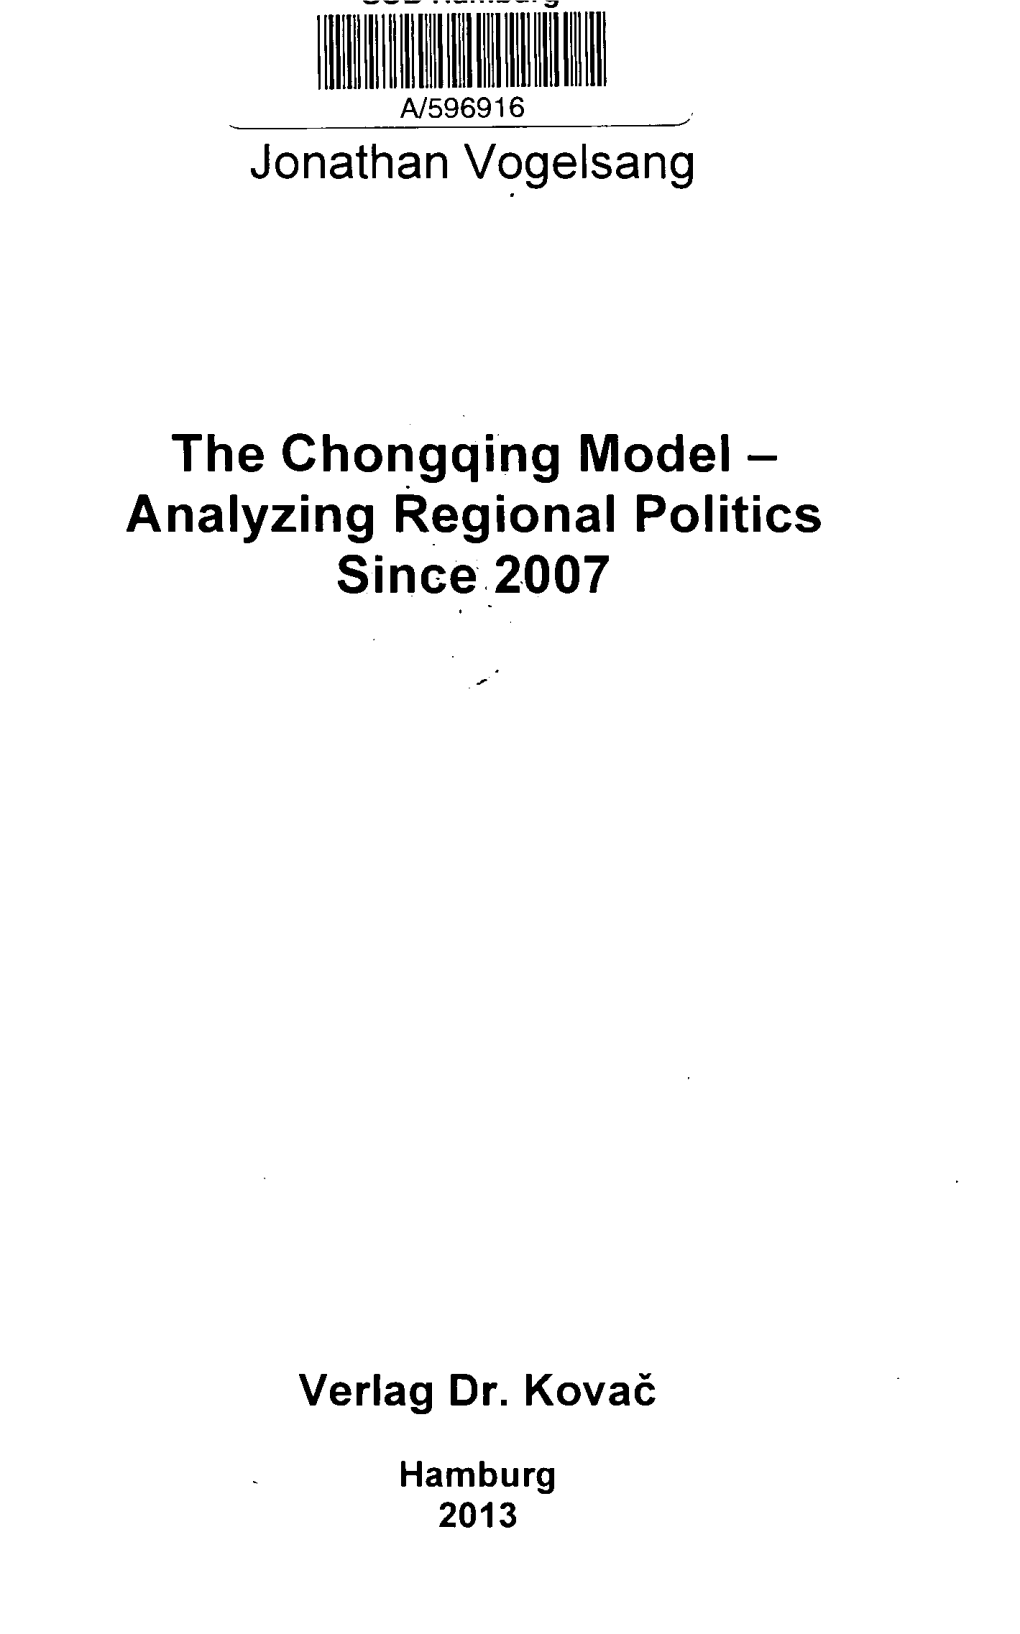 The Chongqing Model - Analyzing Regional Politics Since 2007